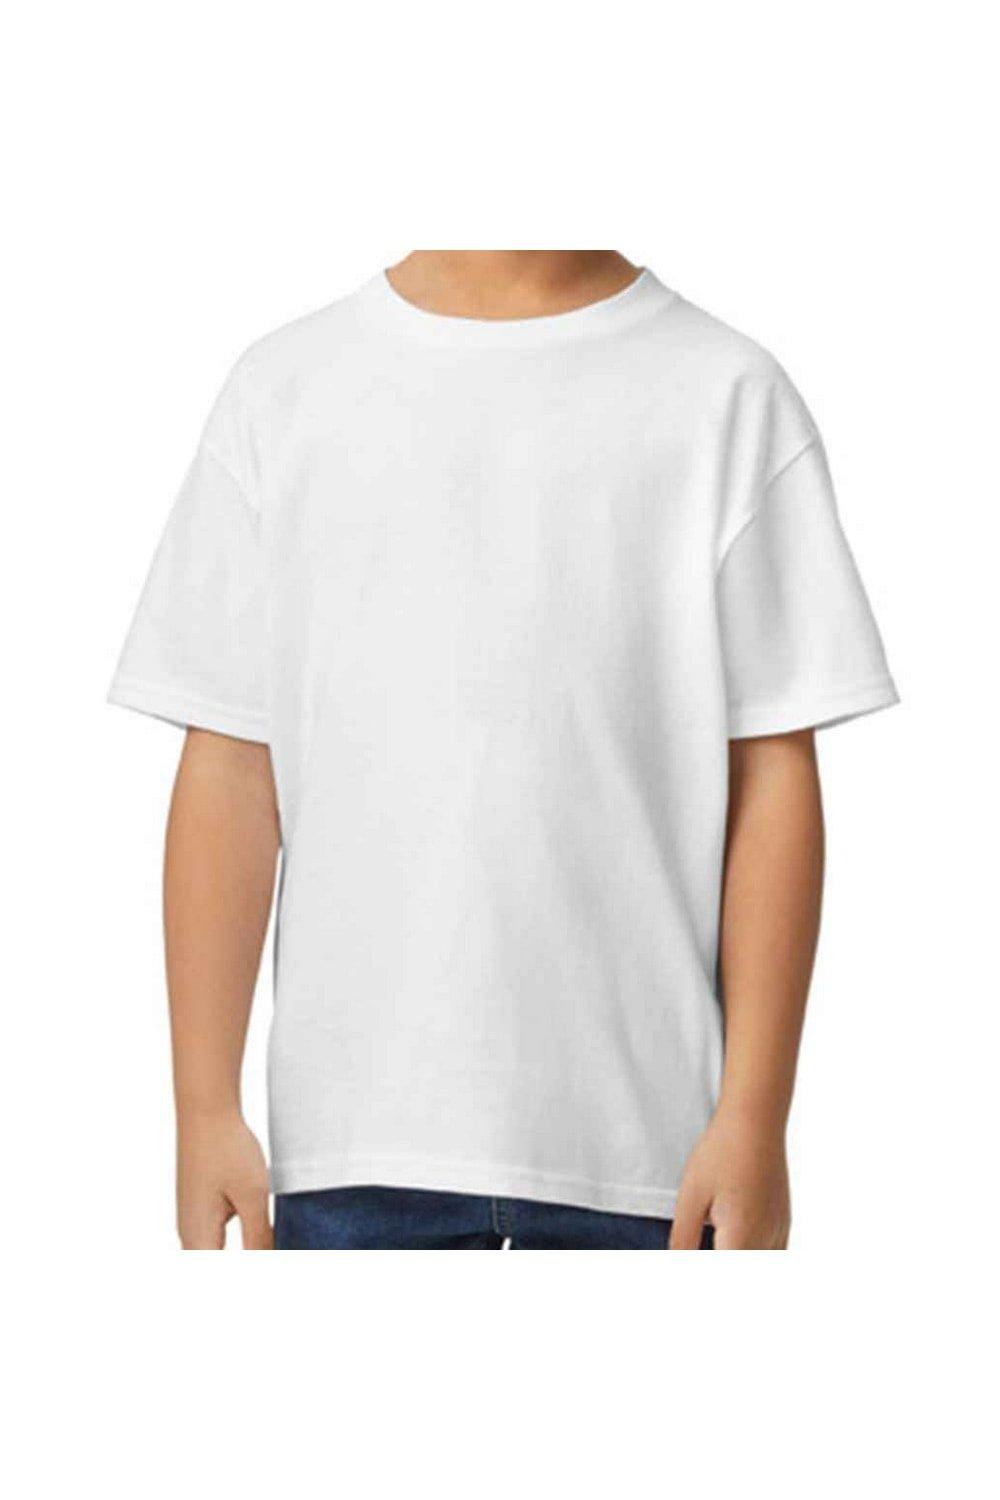 Midweight Soft Touch T-Shirt